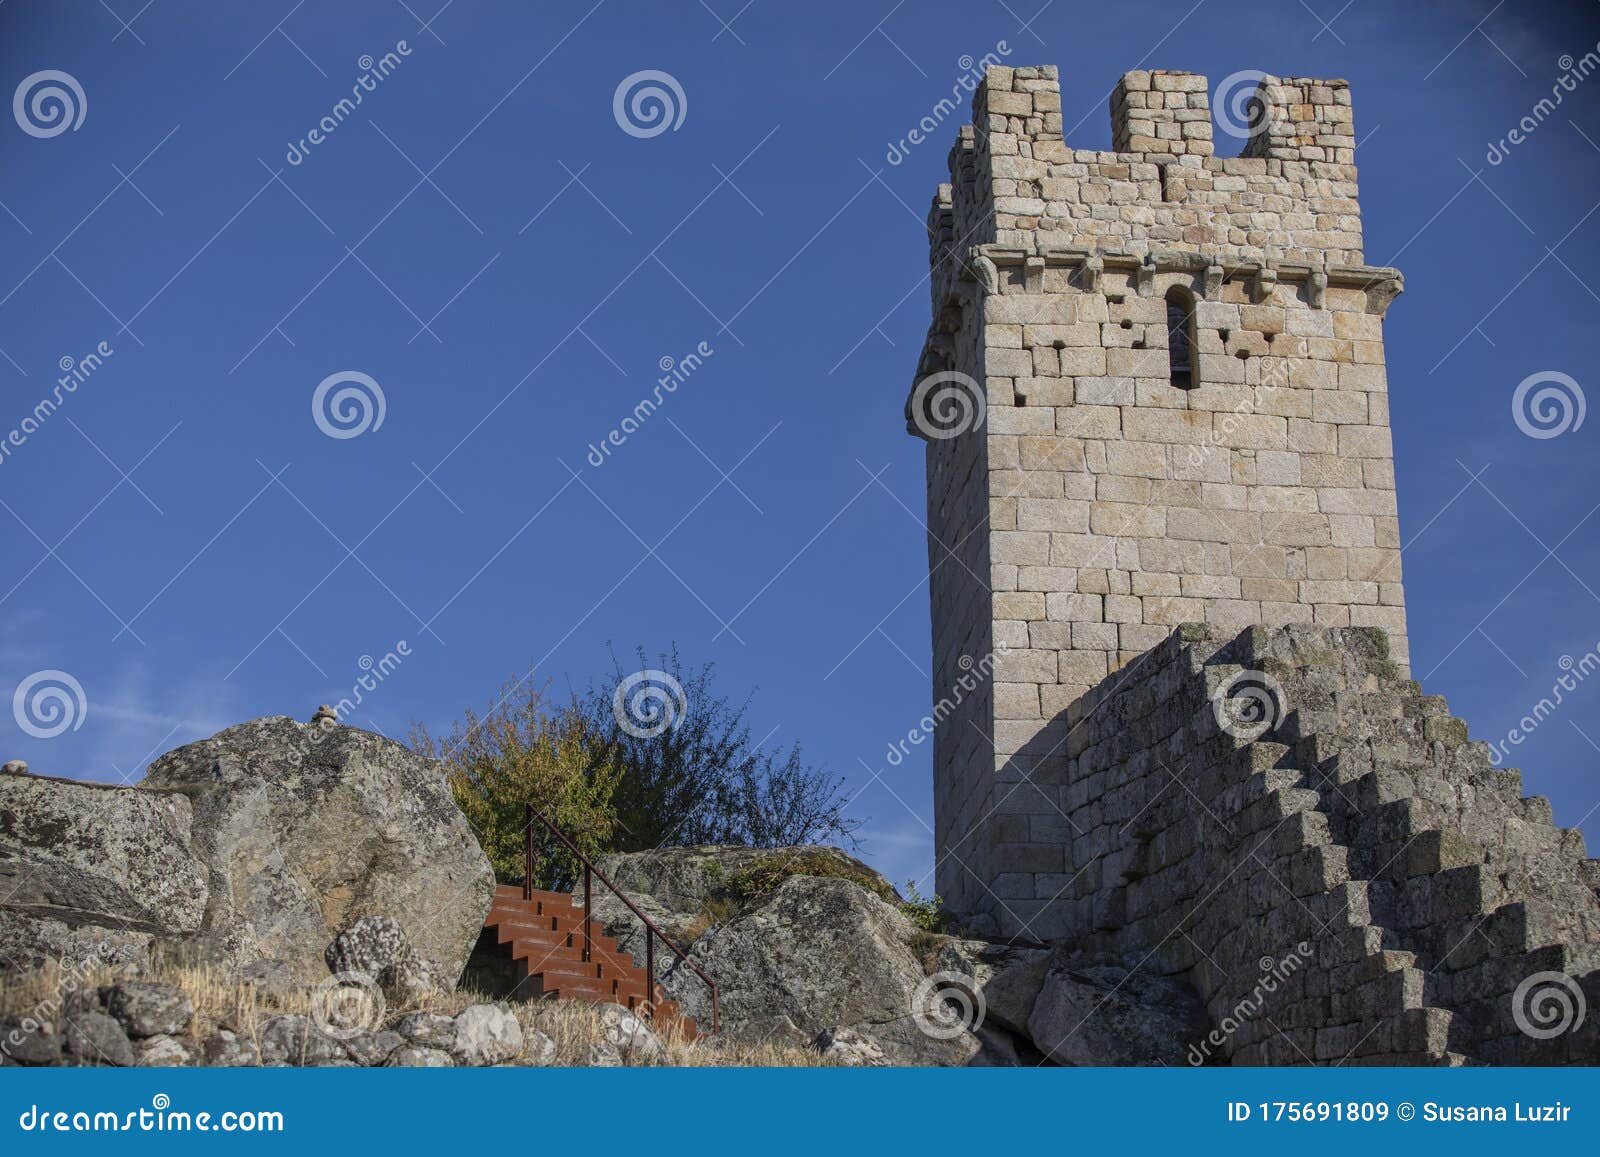 numao castle, vila nova de foz coa, portugal